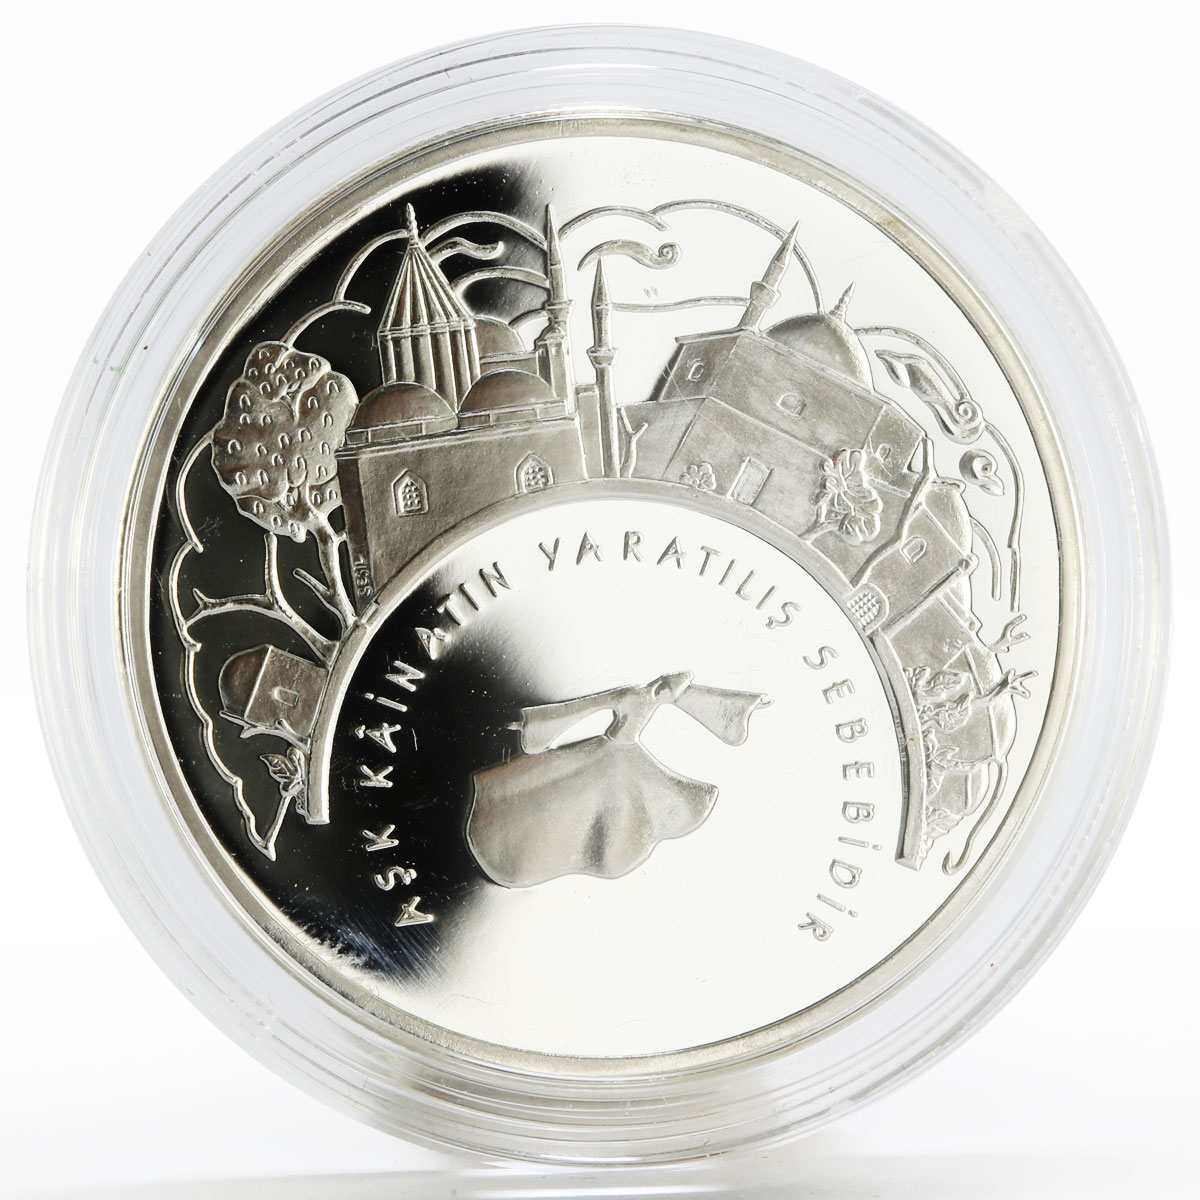 Turkey 30 lira 800th Anniversary of the Birth of Mevlana proof silver coin 2007